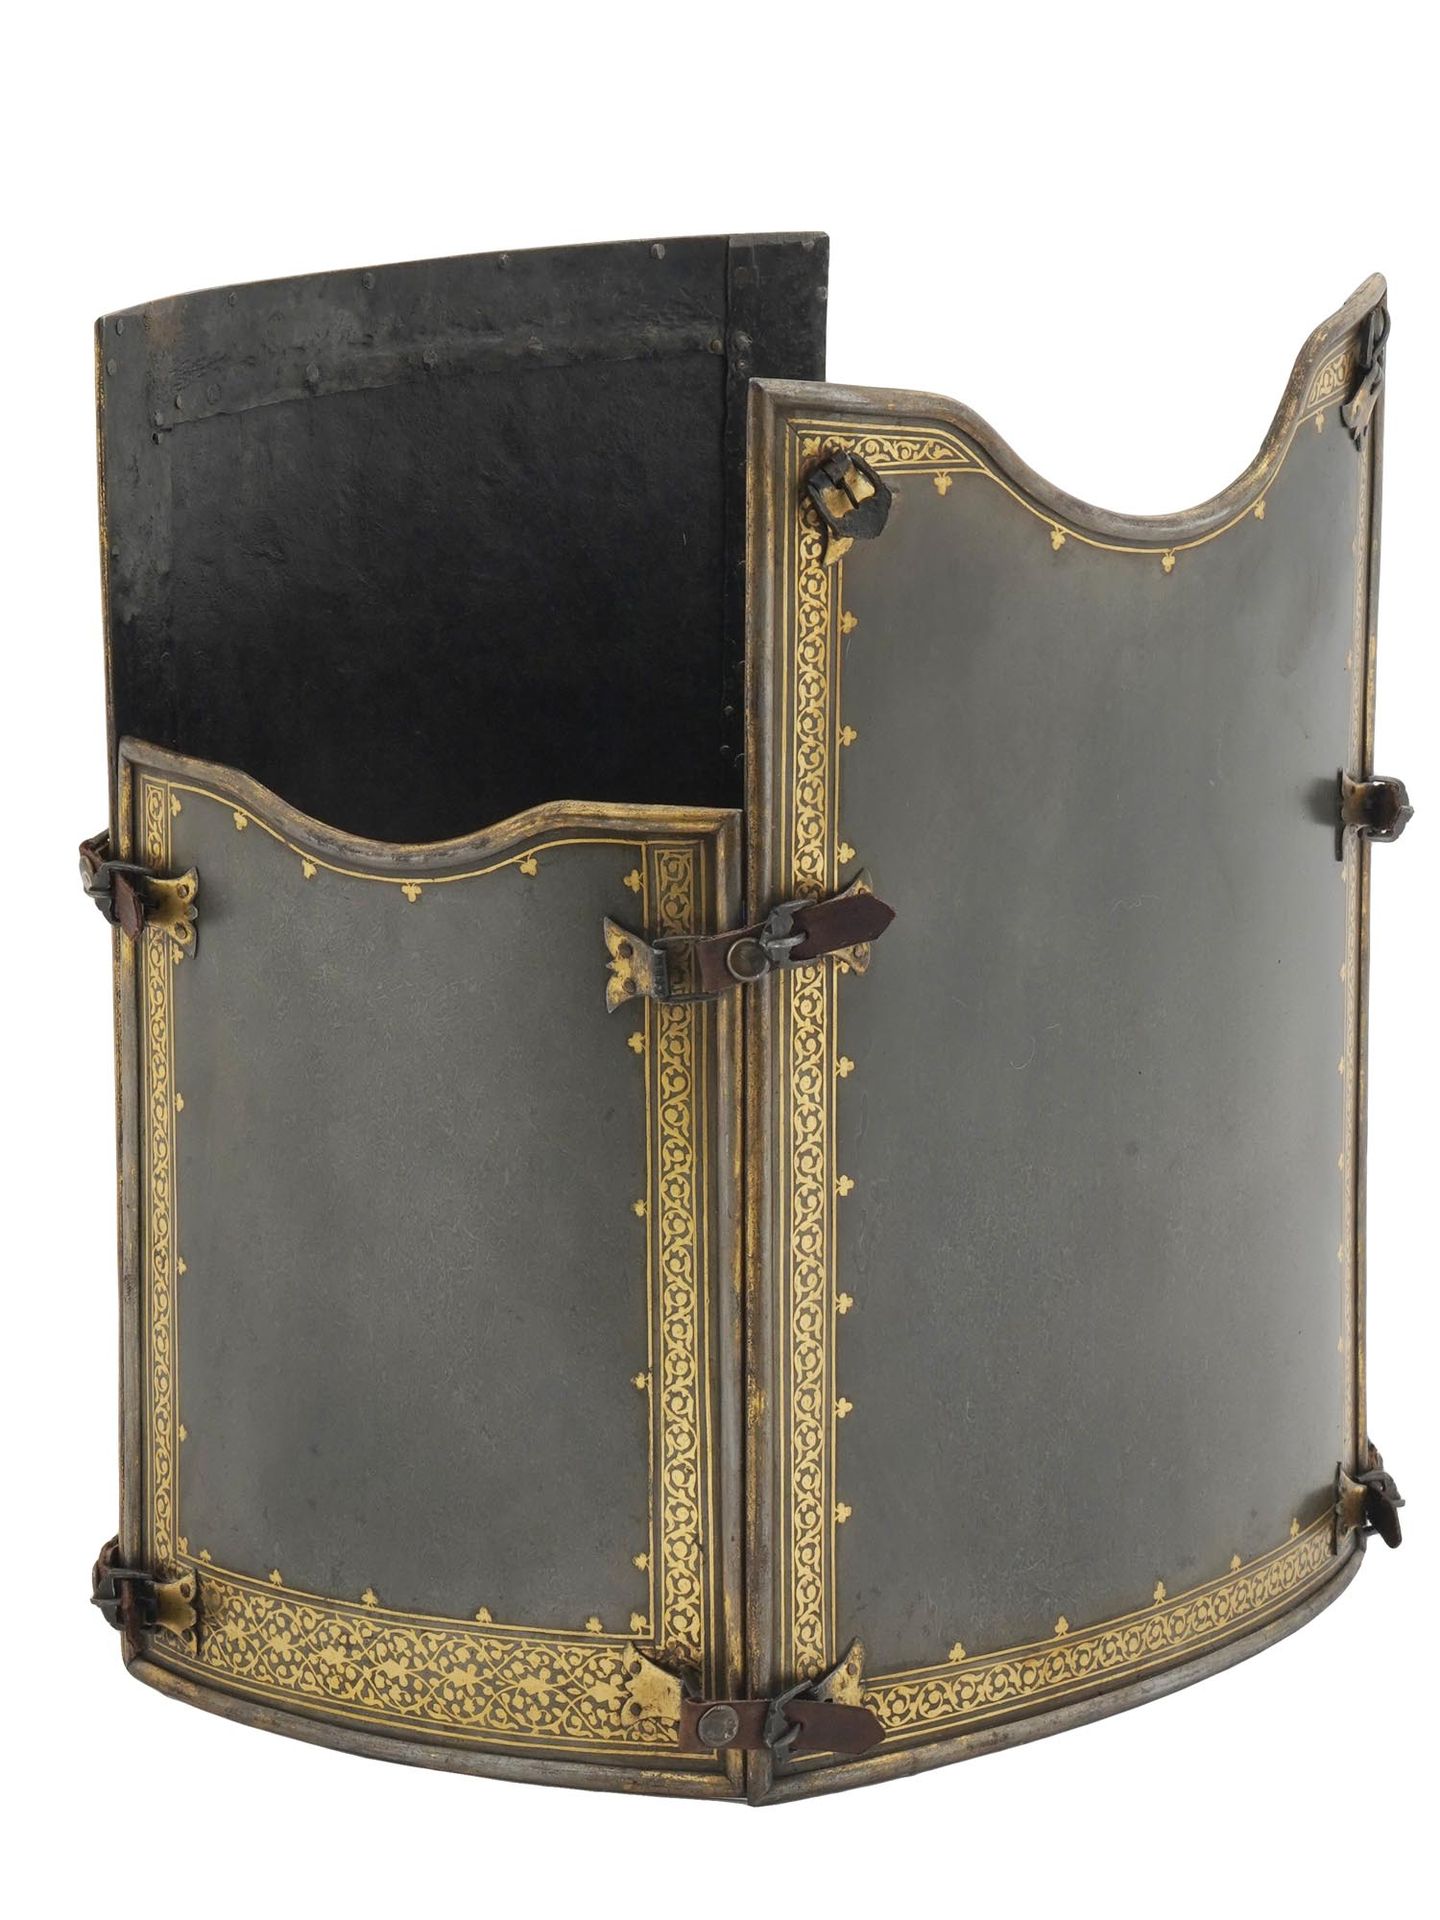 Null 
罕见的一套四块 "Char-Aina "盔甲板，来自萨法维时期，伊朗，18世纪。
大马士革钢镶嵌黄金 "koftgari"，长方形和凸起，上部略微弯&hellip;